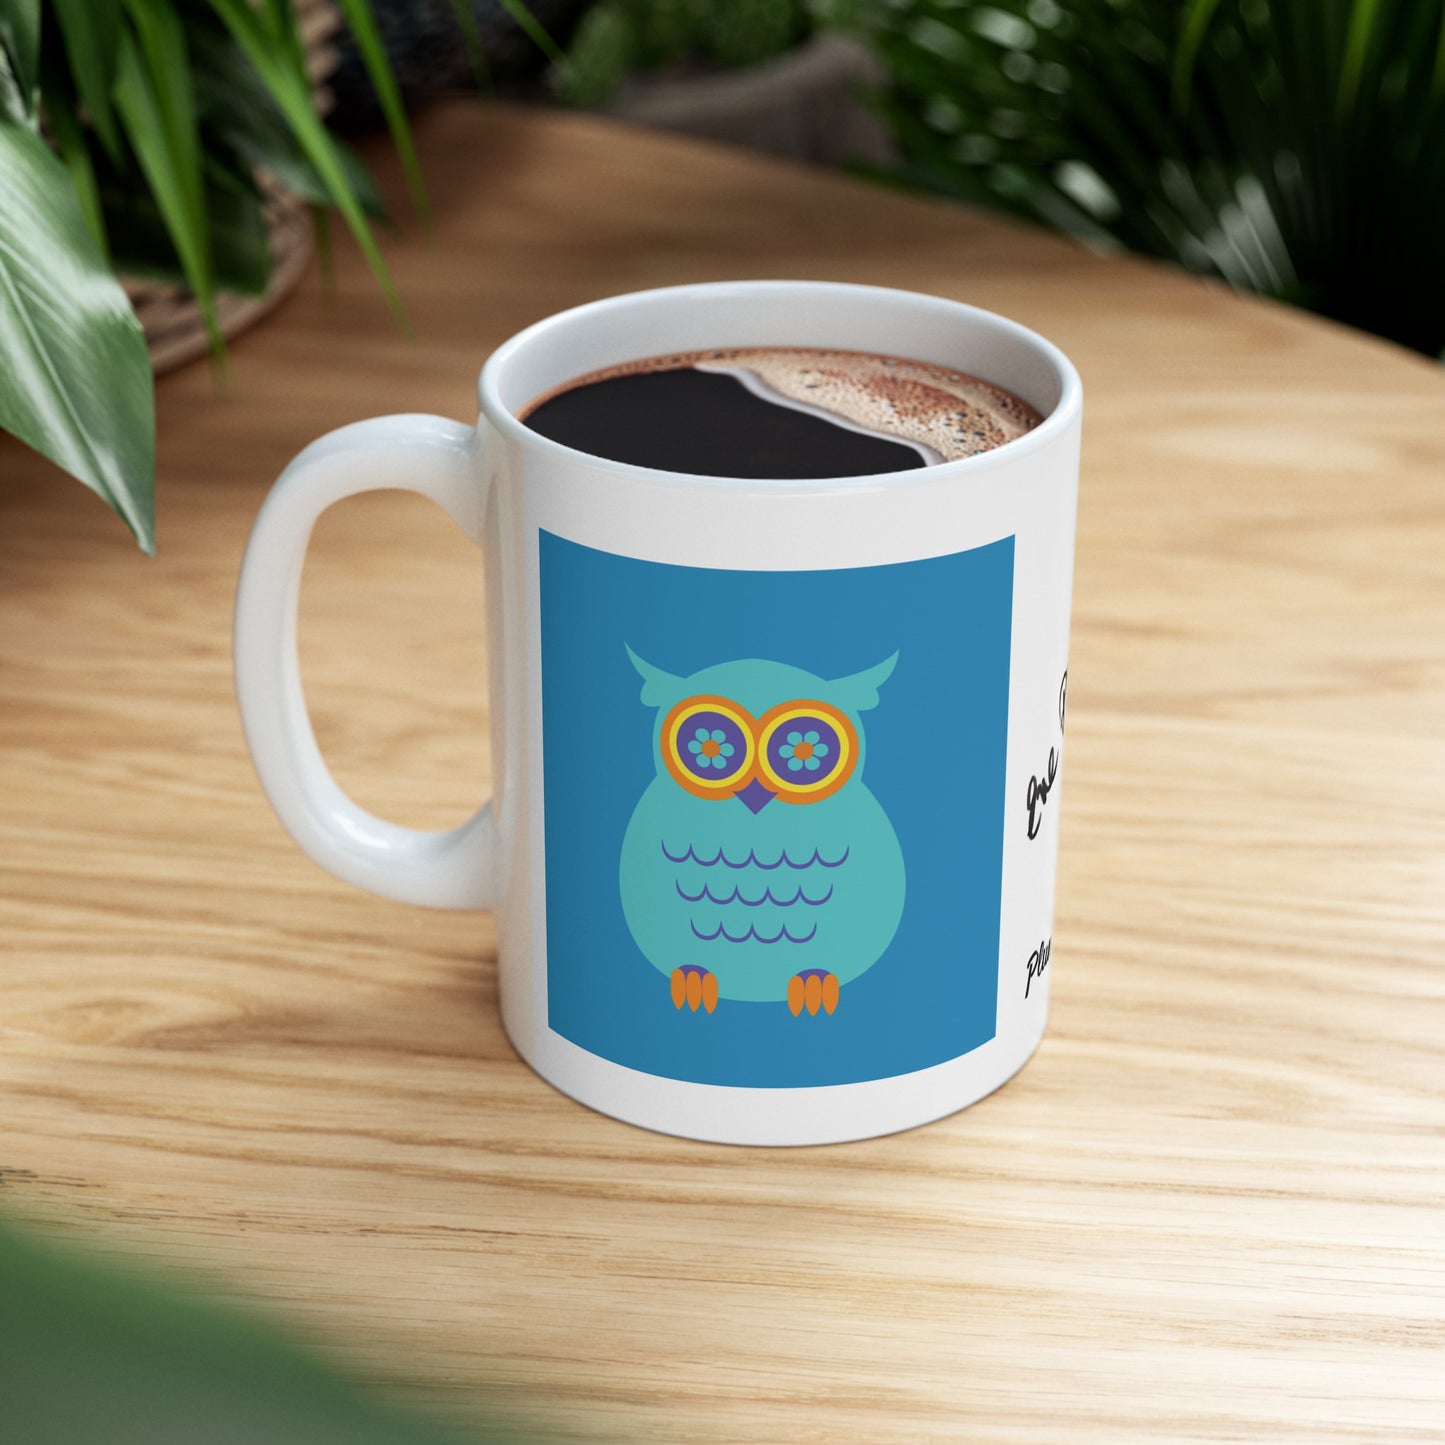 PlumbGoods Owl Mug Blue